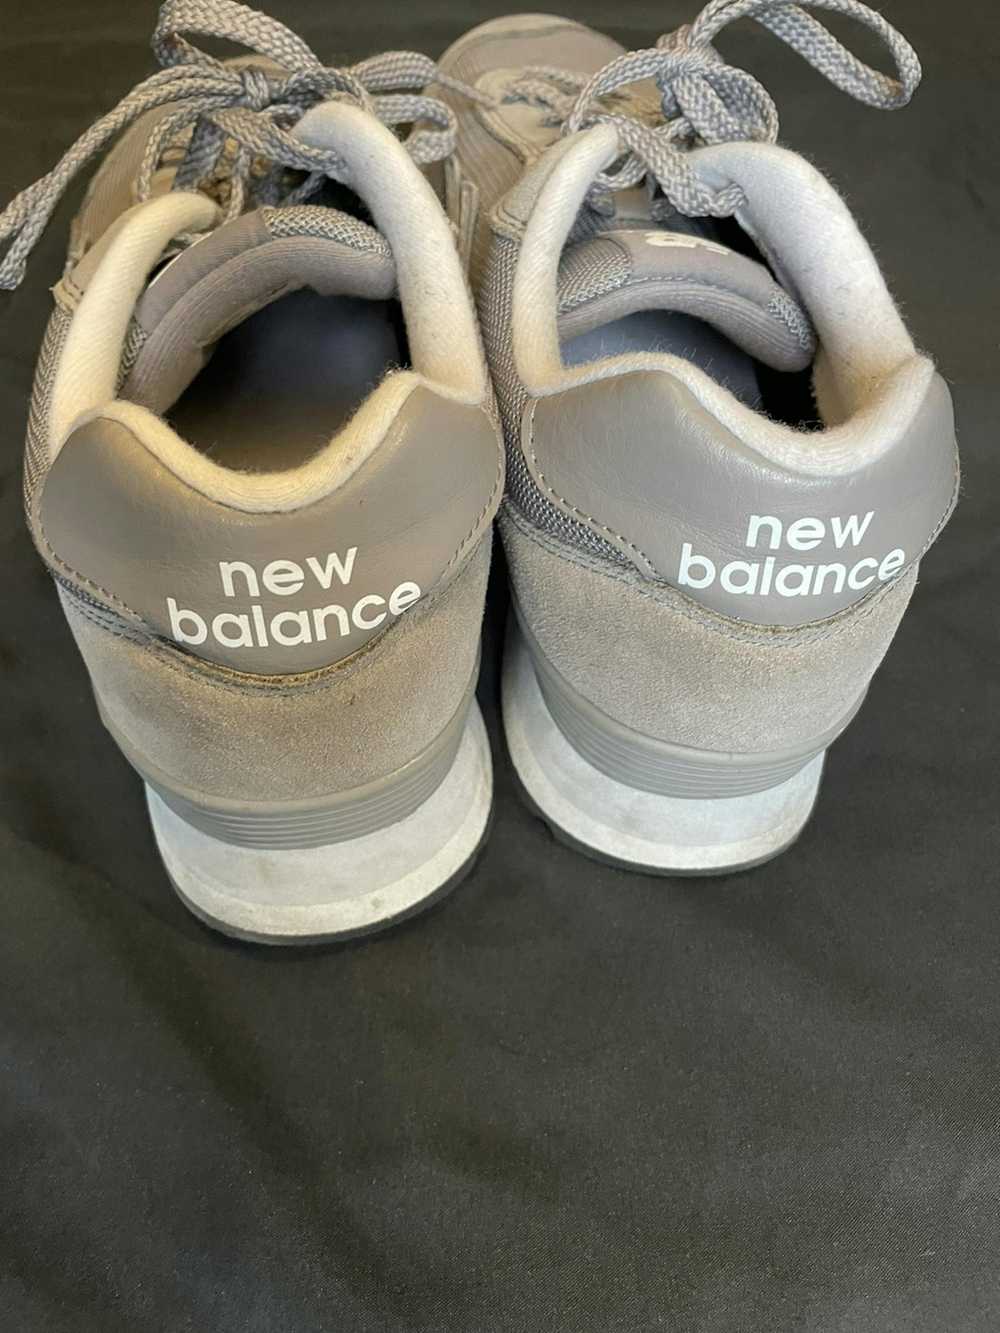 New Balance New Balance 515 in Grey - image 4